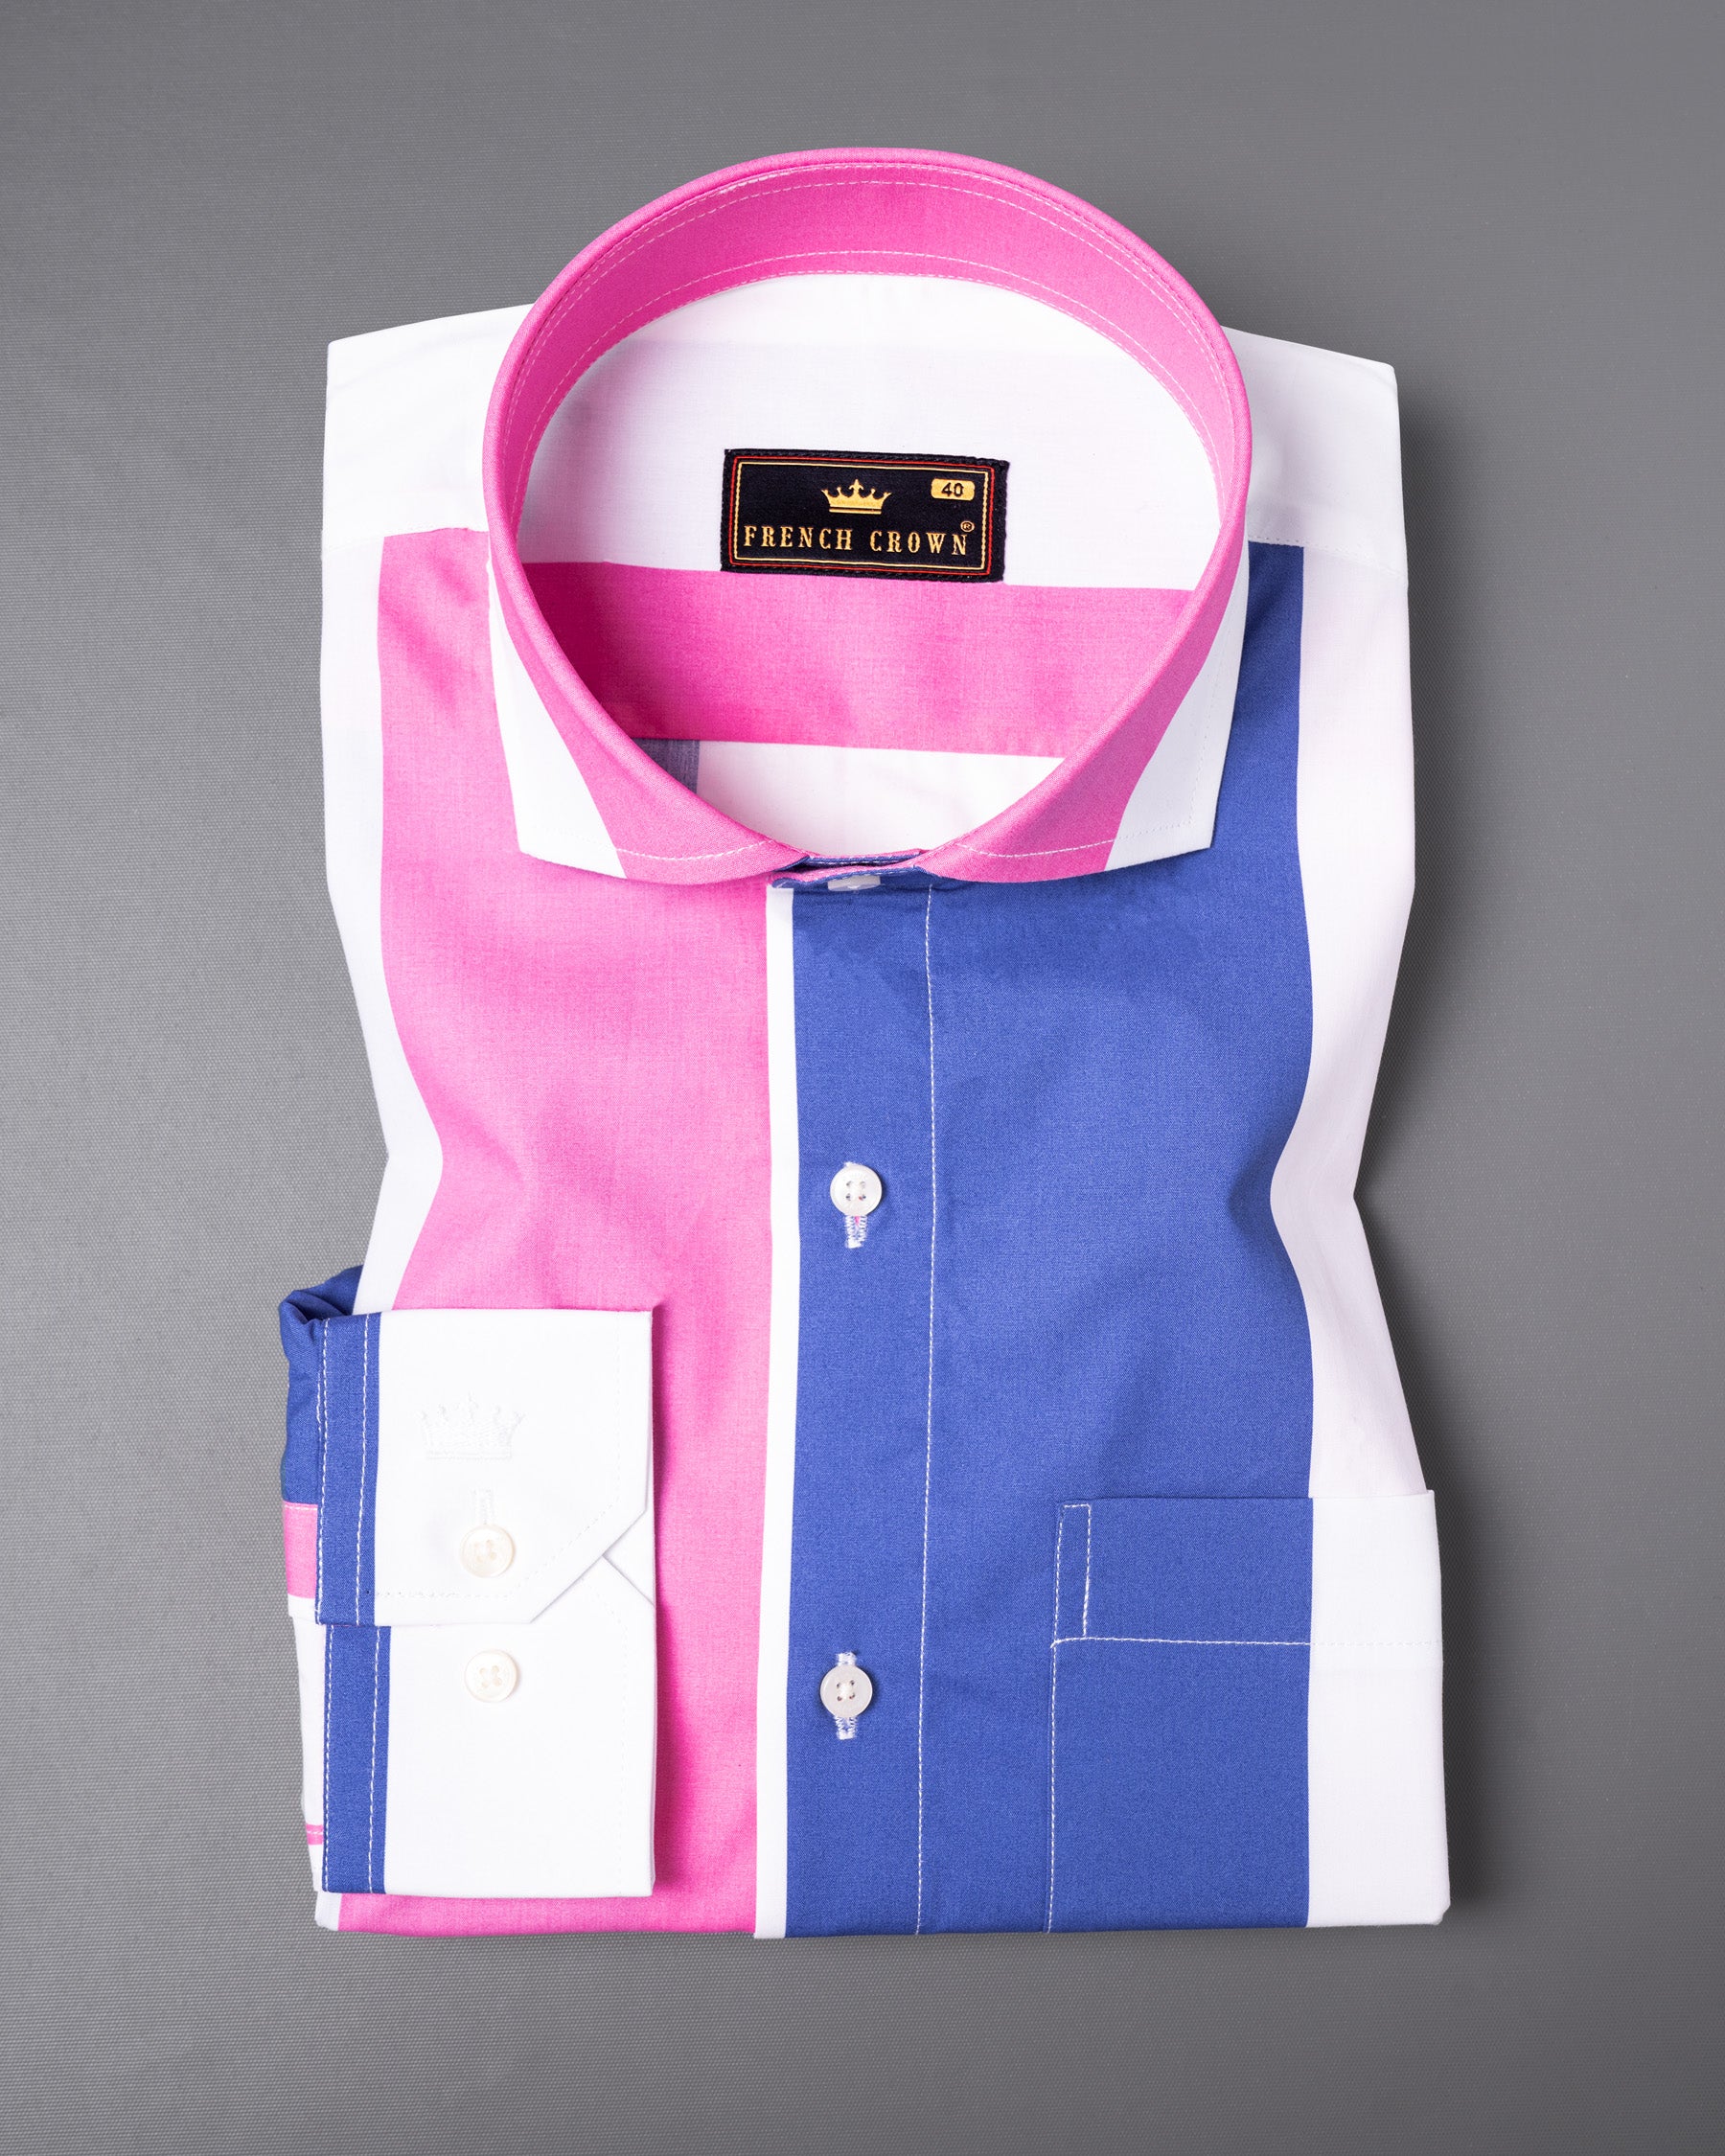 Indigo Blue with Milky White and Persian Pink Premium Cotton Shirt 5114-CA-38, 5114-CA-H-38, 5114-CA-39, 5114-CA-H-39, 5114-CA-40, 5114-CA-H-40, 5114-CA-42, 5114-CA-H-42, 5114-CA-44, 5114-CA-H-44, 5114-CA-46, 5114-CA-H-46, 5114-CA-48, 5114-CA-H-48, 5114-CA-50, 5114-CA-H-50, 5114-CA-52, 5114-CA-H-52